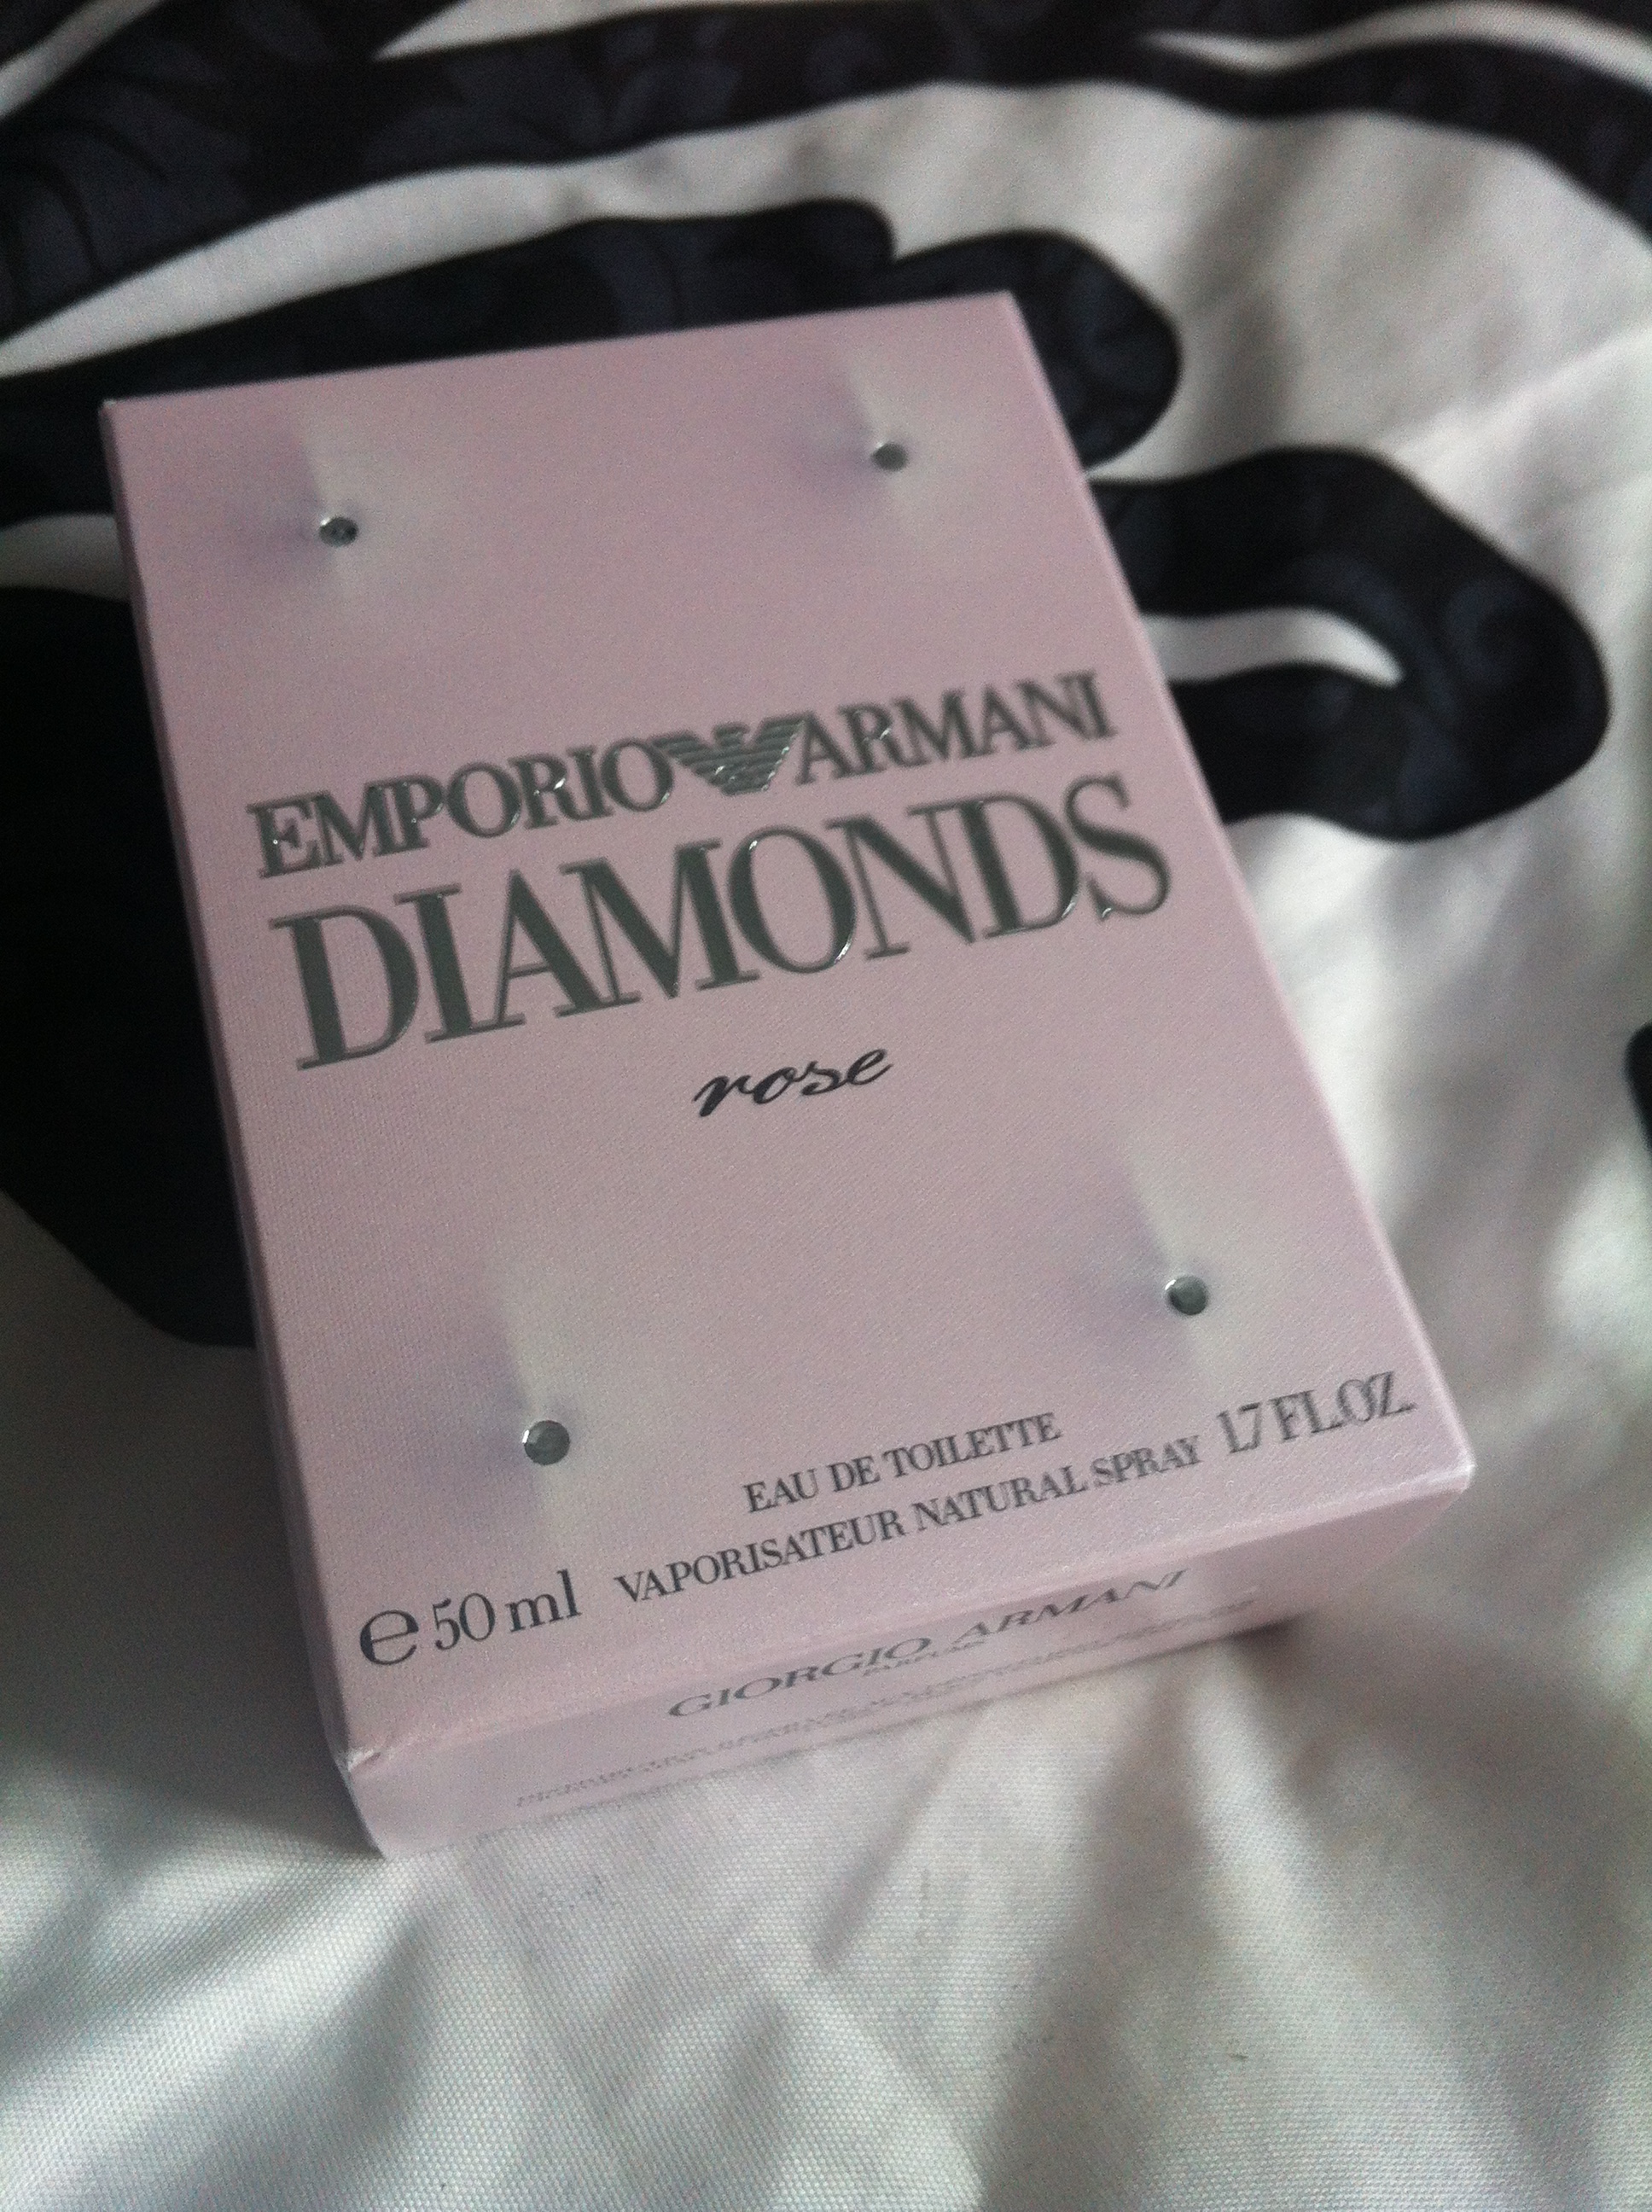 emporio diamonds rose